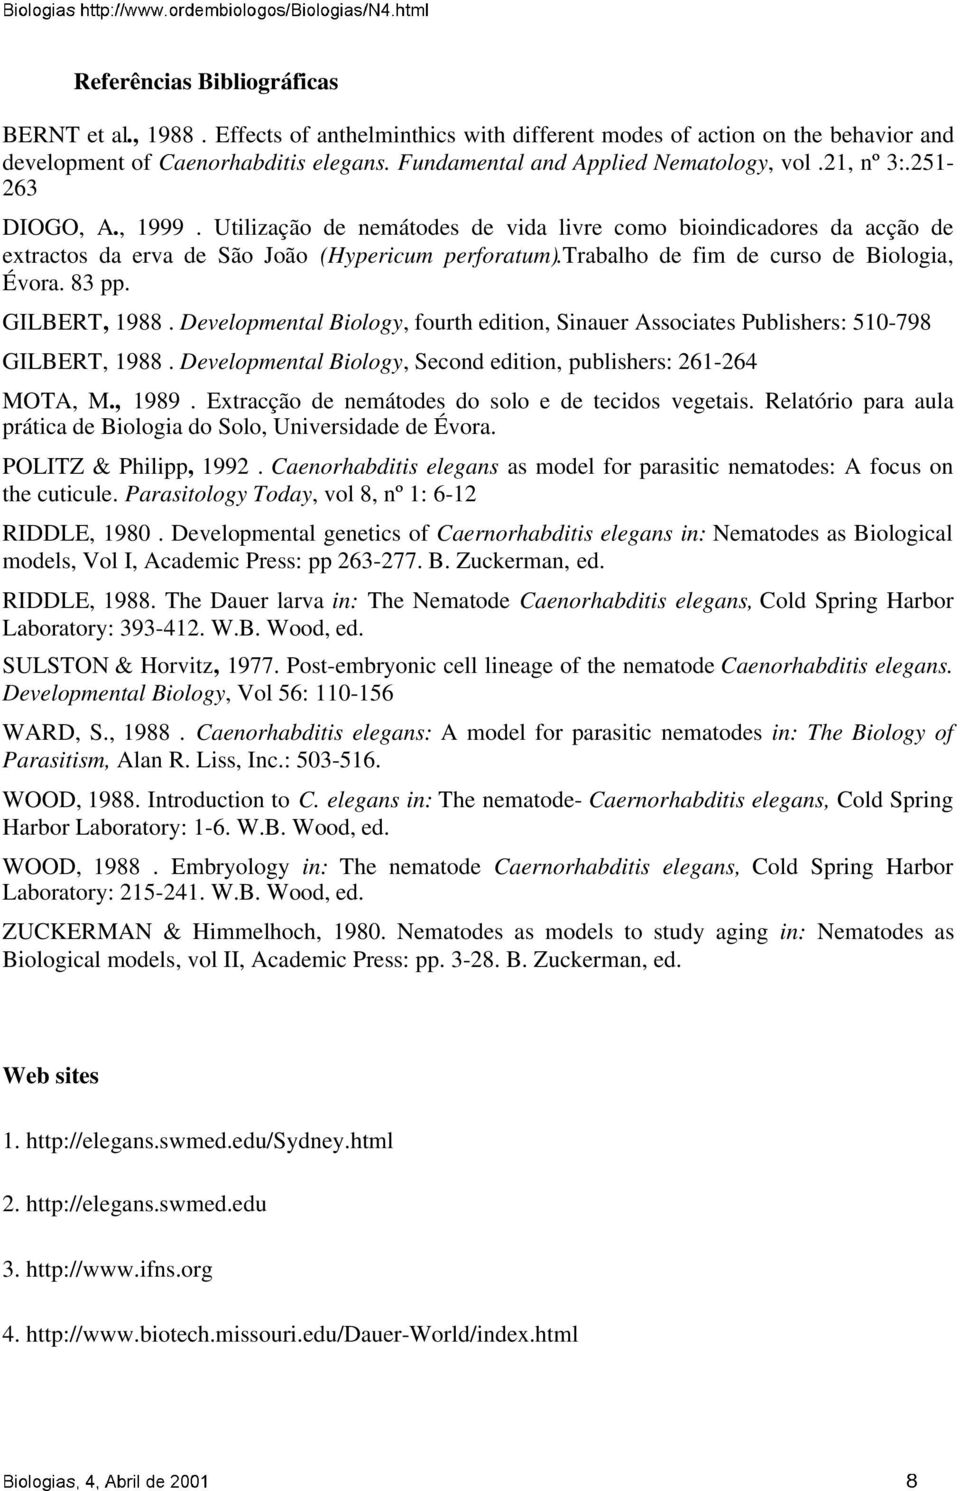 trabalho de fim de curso de Biologia, Évora. 83 pp. GILBERT, 1988. Developmental Biology, fourth edition, Sinauer Associates Publishers: 510-798 GILBERT, 1988.